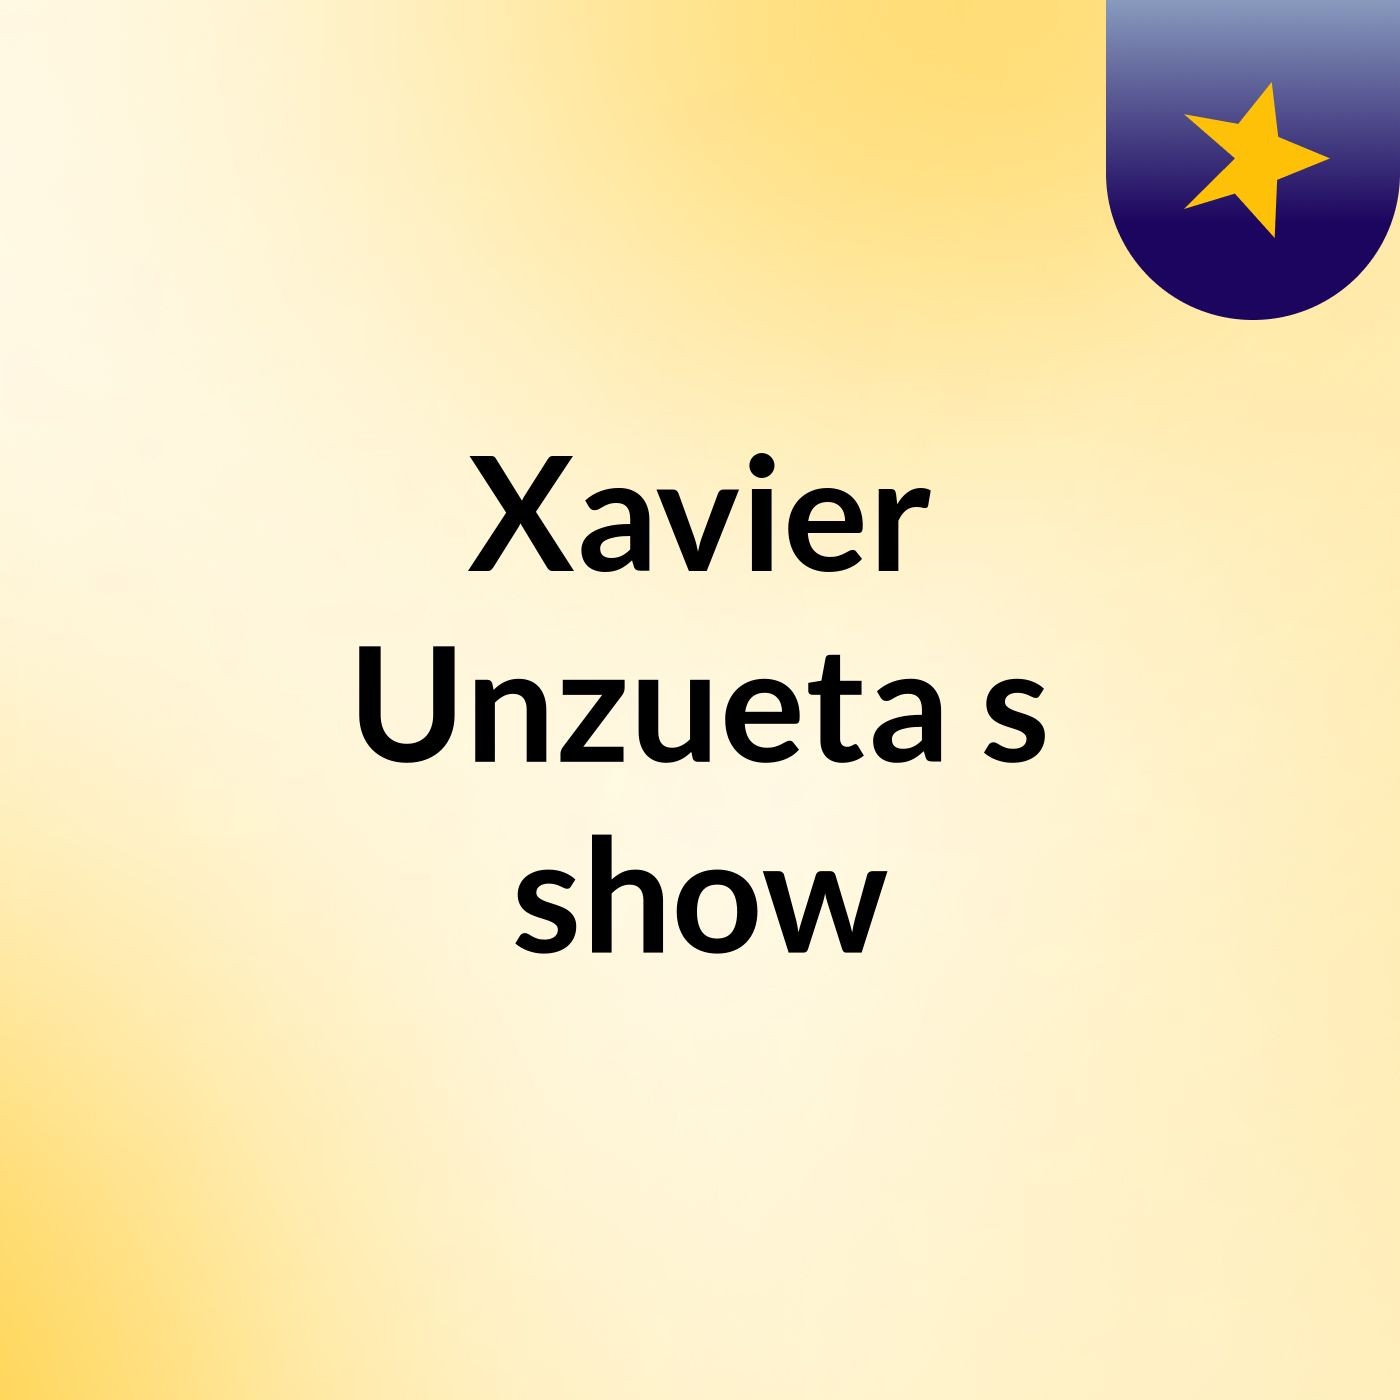 Xavier Unzueta's show